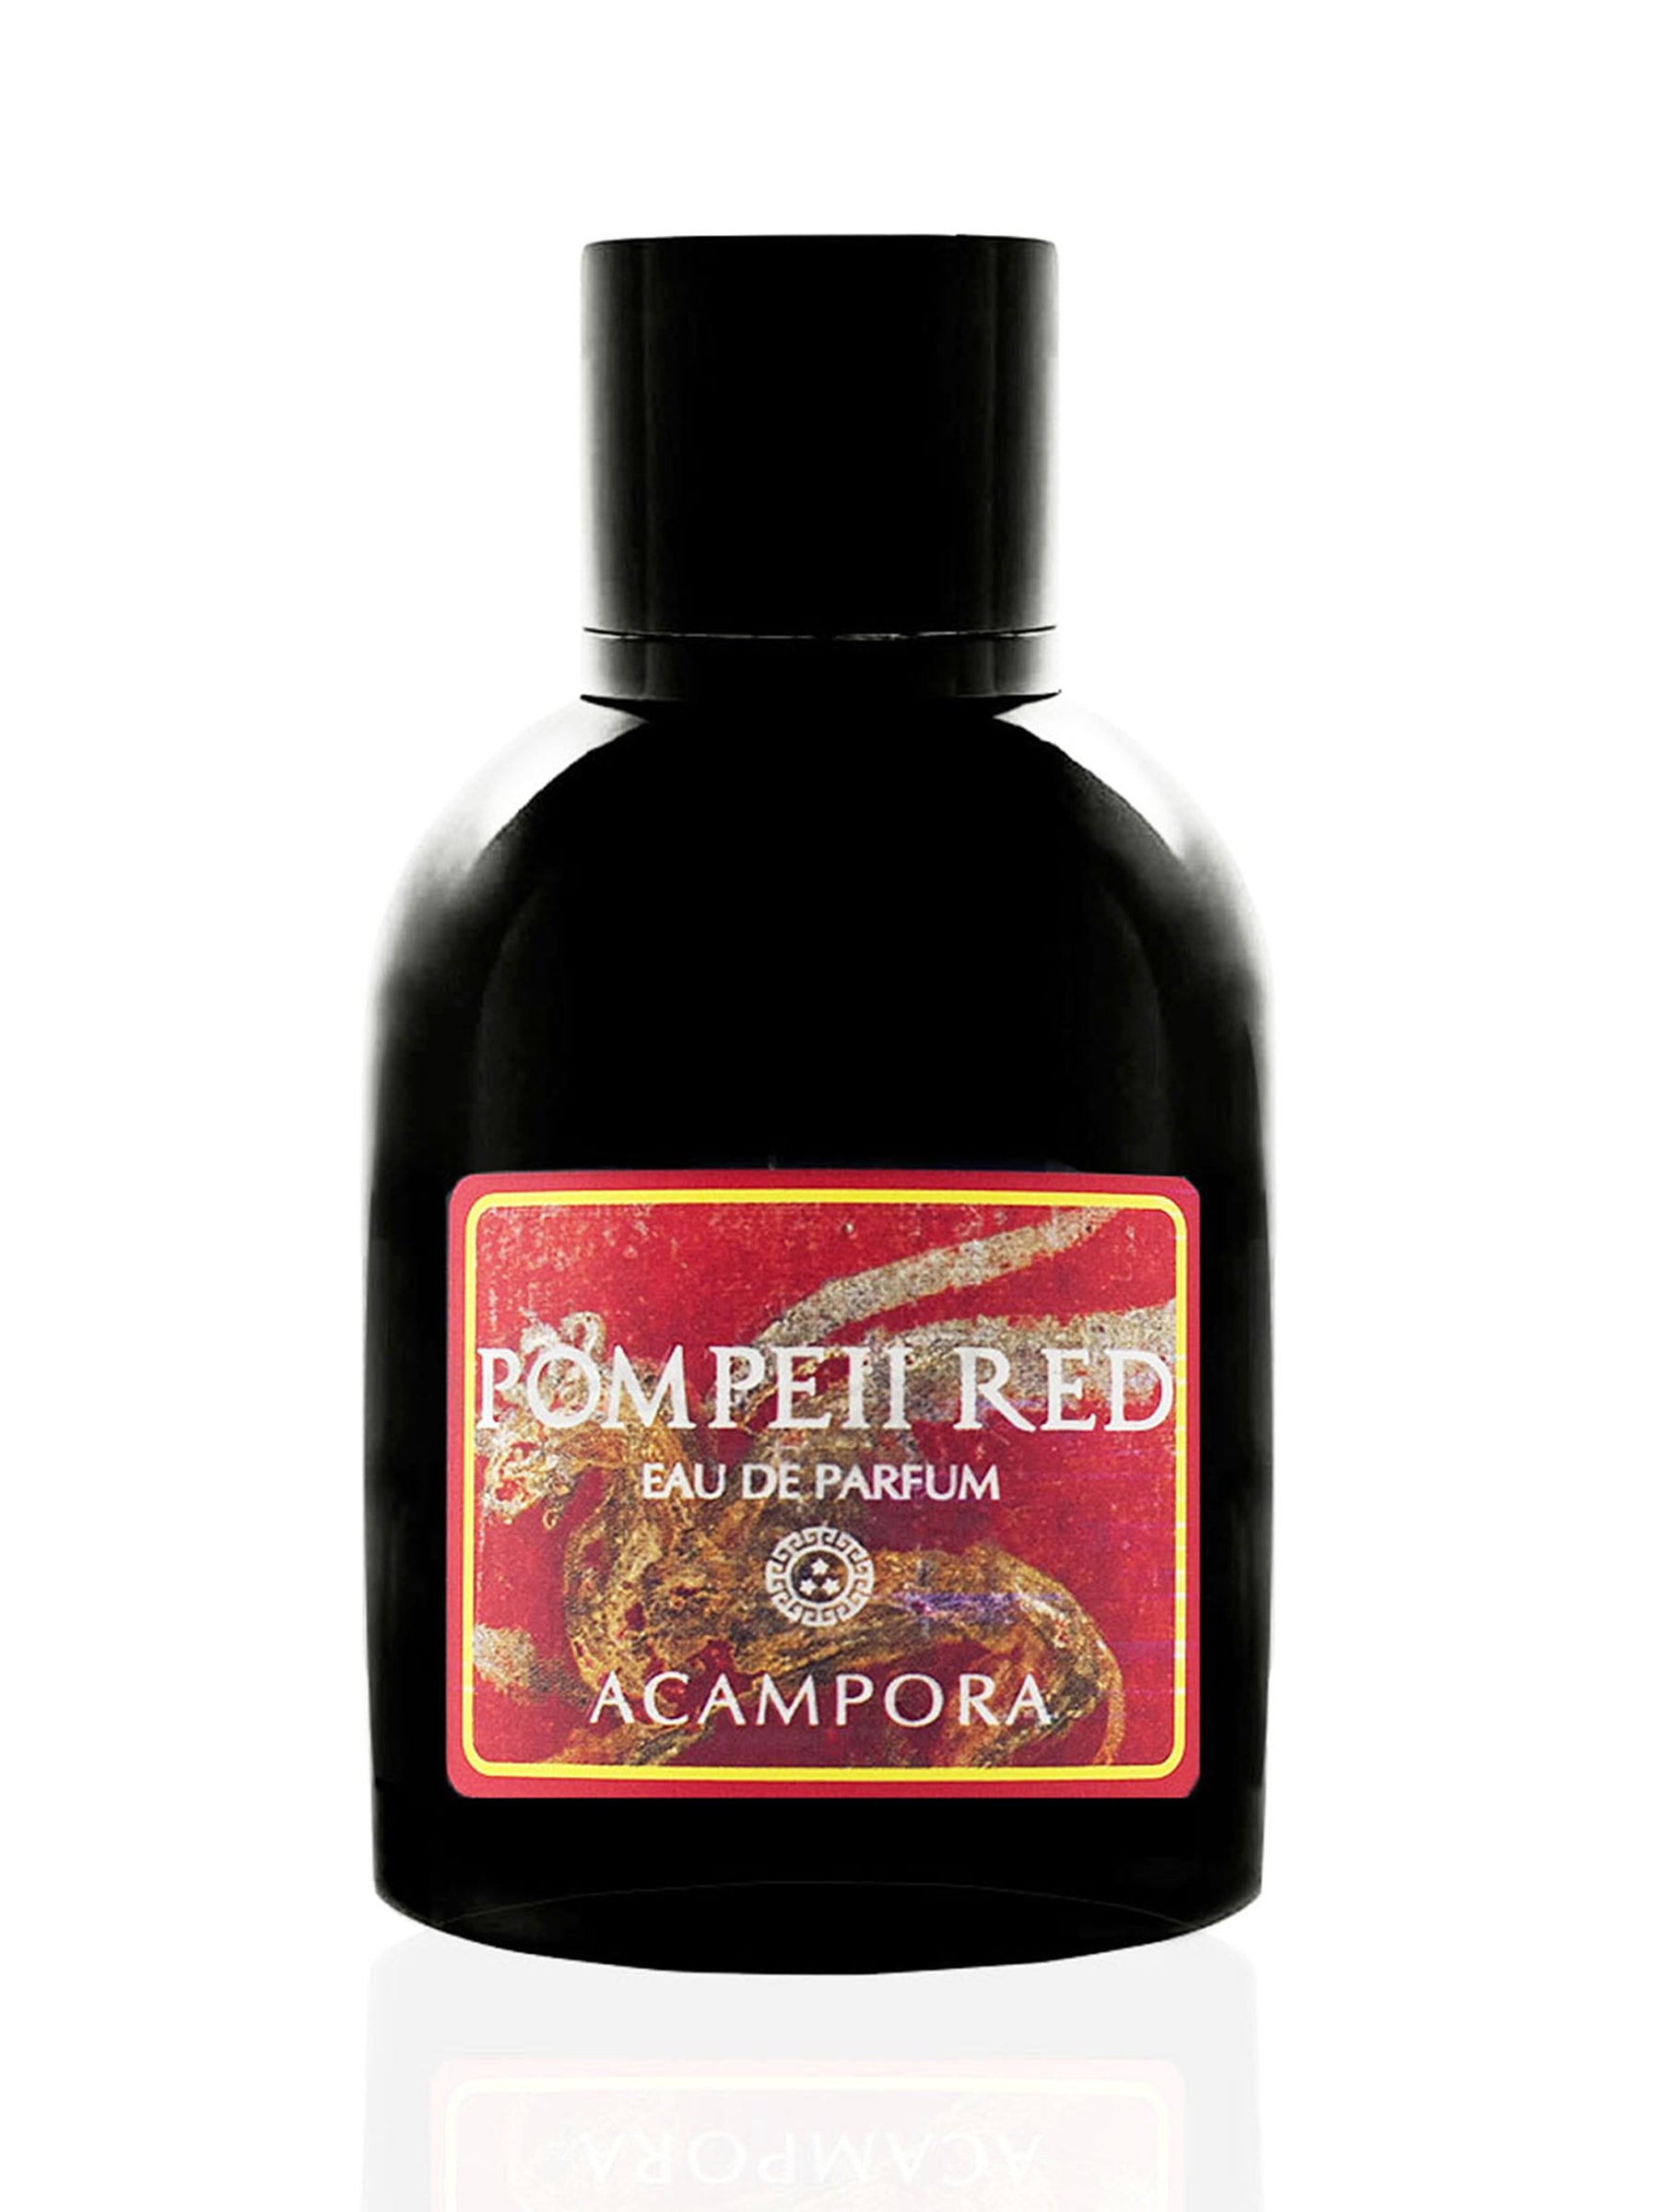 Pompeii Red - Eau de Parfum